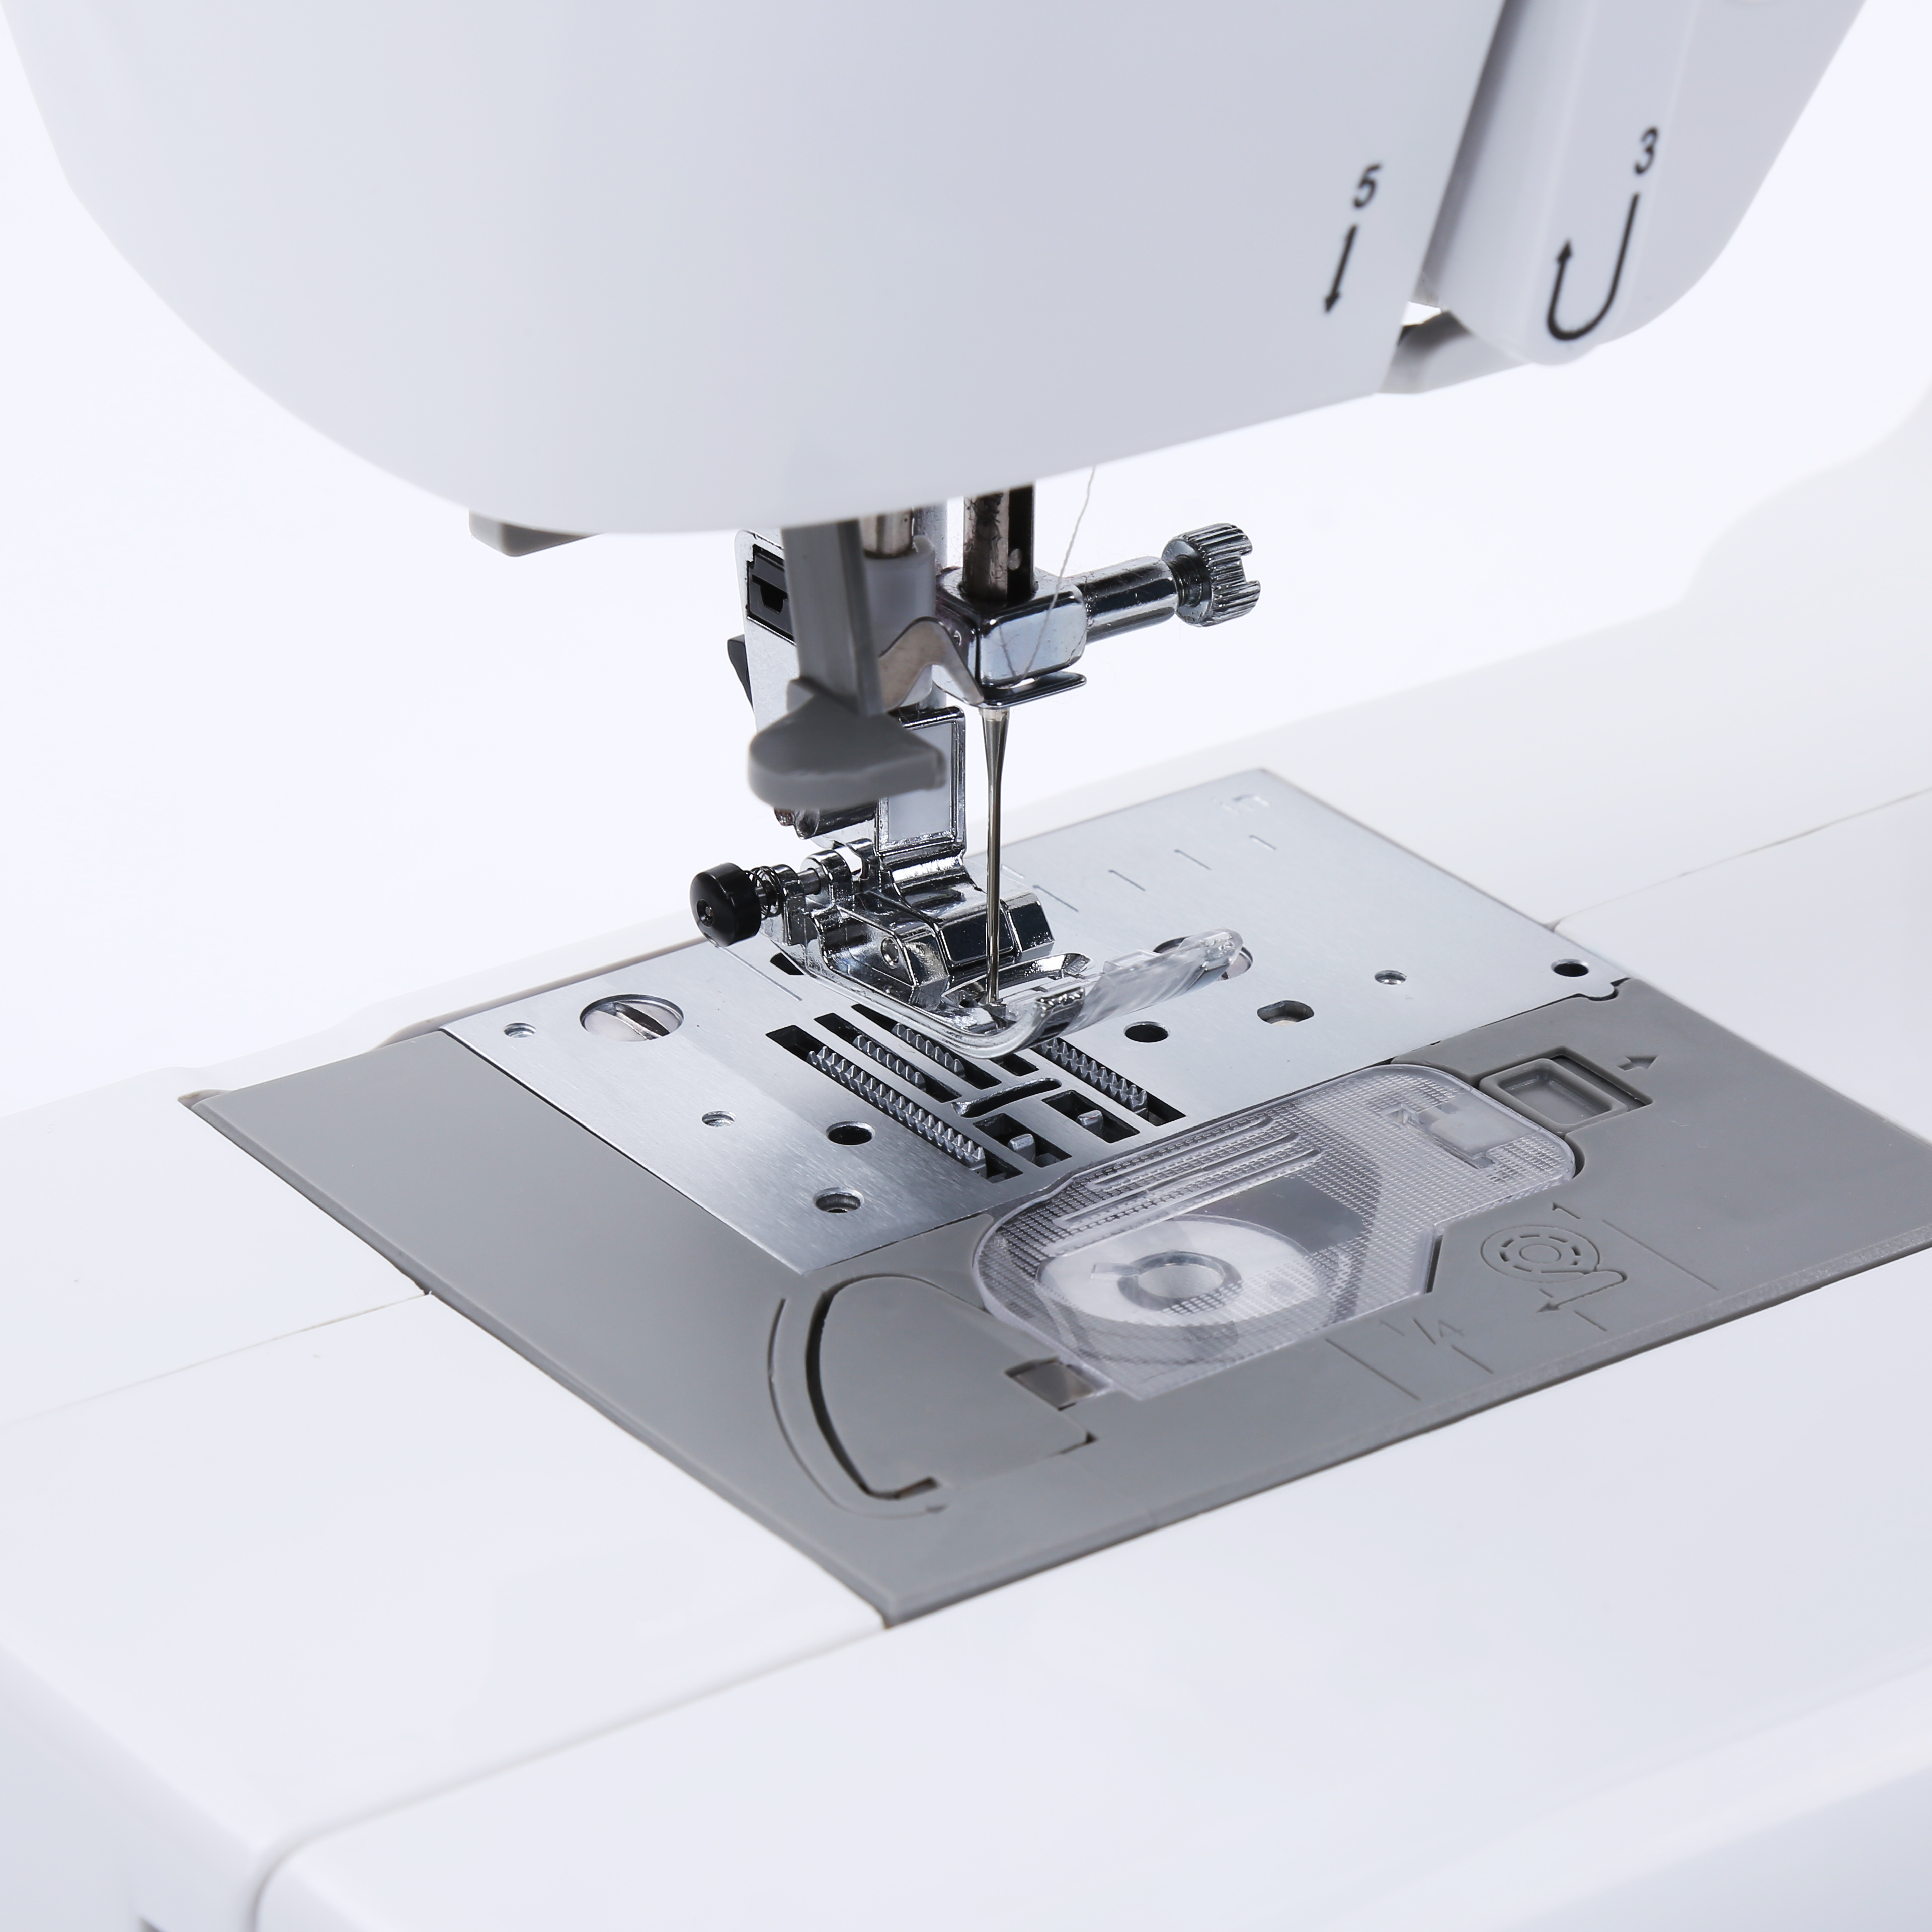 BAI Sewing Machine Embroidery Machines for Portable Mini Sewing Machine